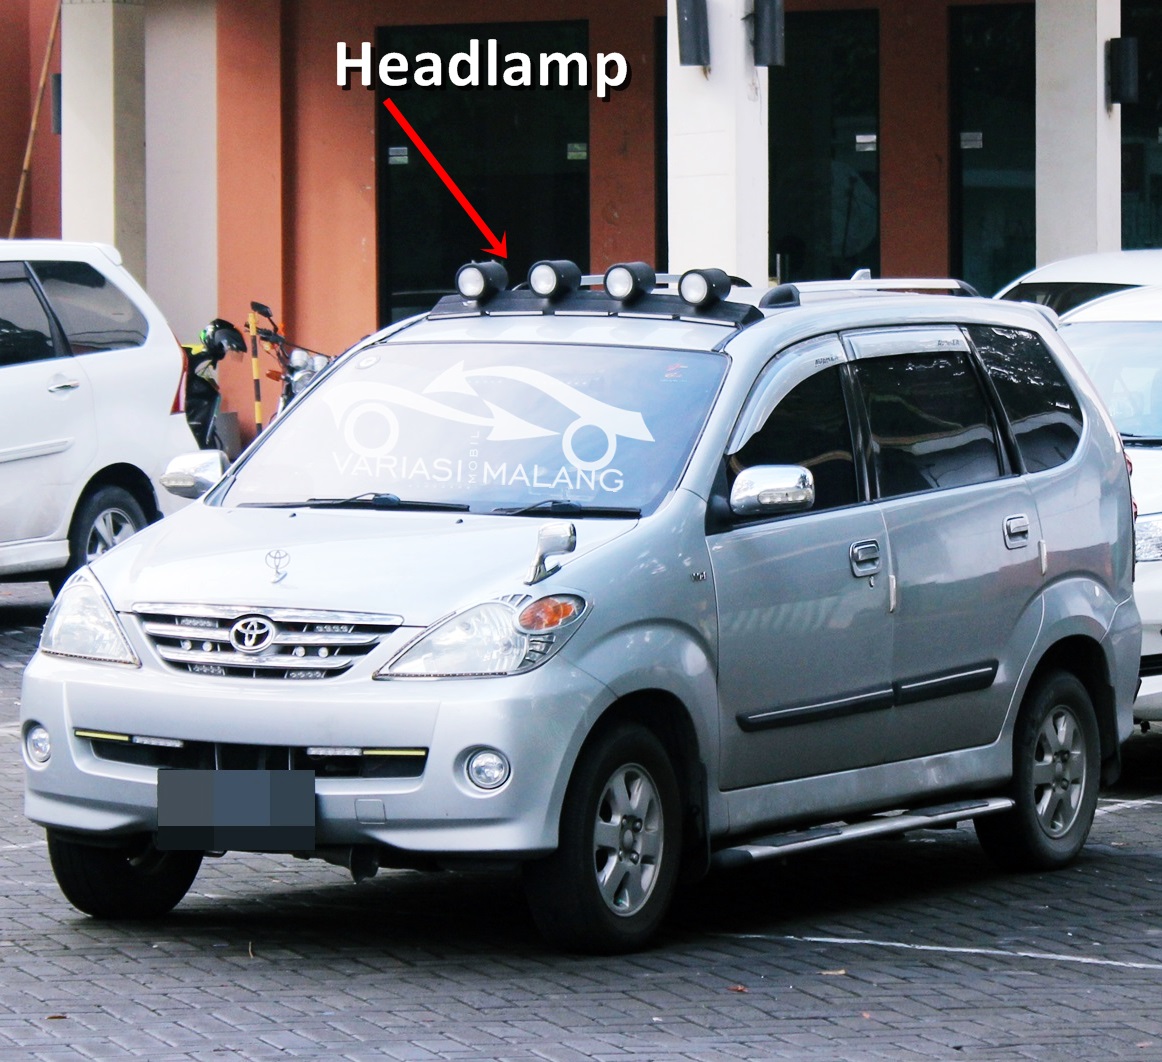 Jual Roof Lamp Head Lamp Untuk Mobil Avanza Xenia Malang